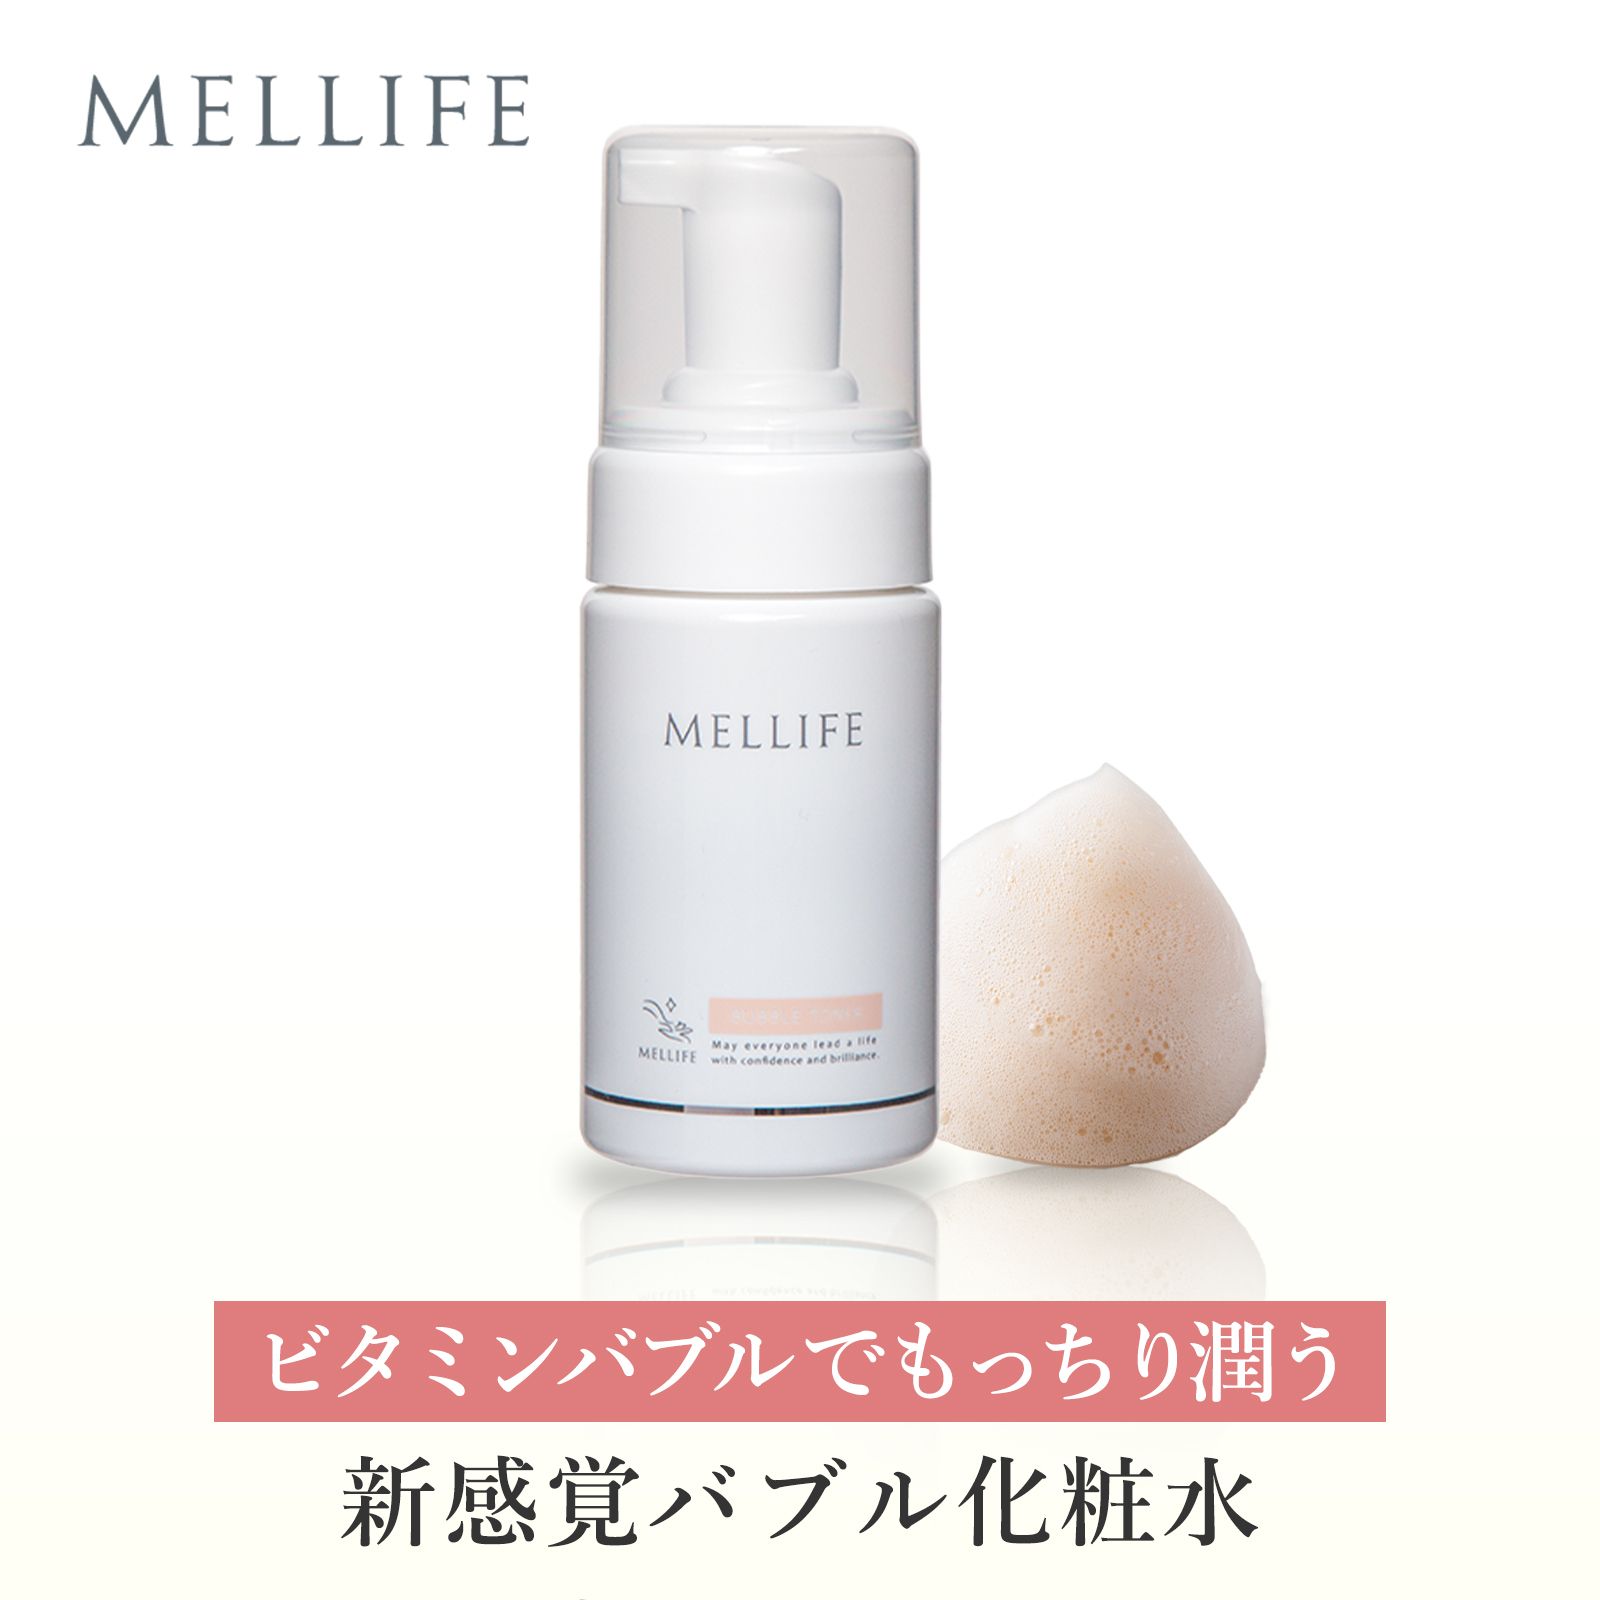 MELLIFE メリフ バブルトナー 化粧水 9